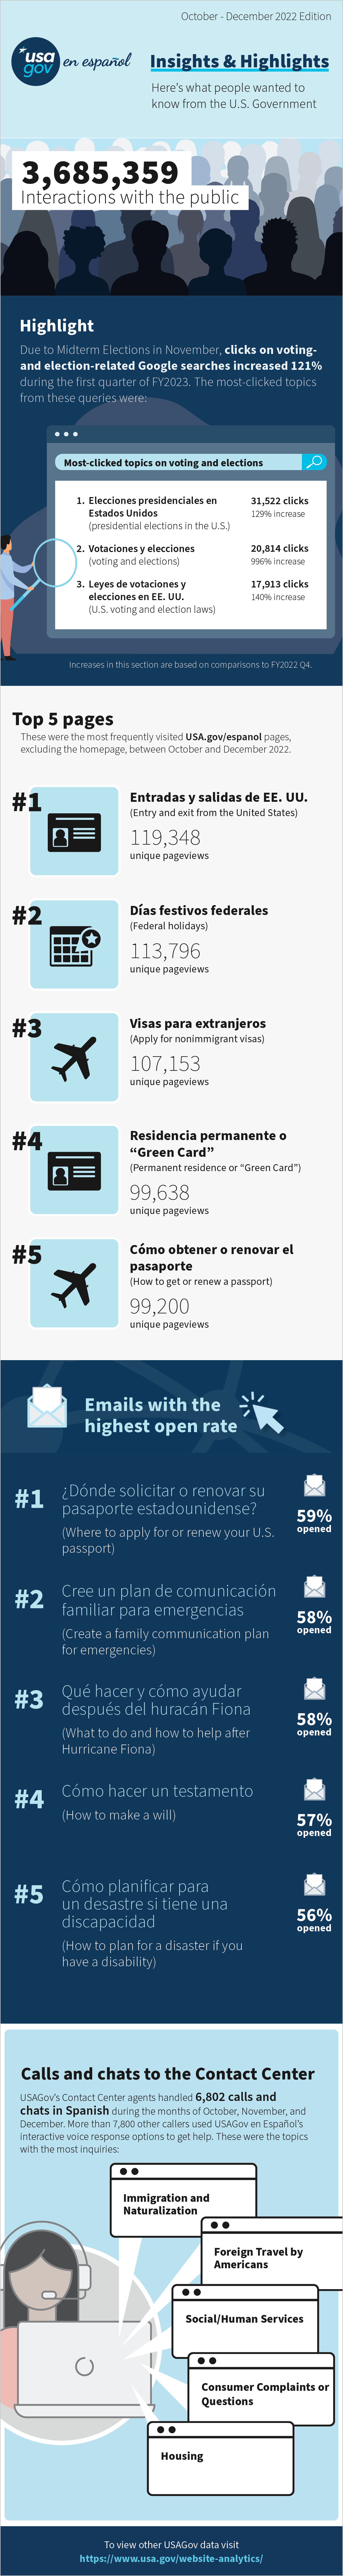 USAGov en Español's Insights and Highlights Infographic 